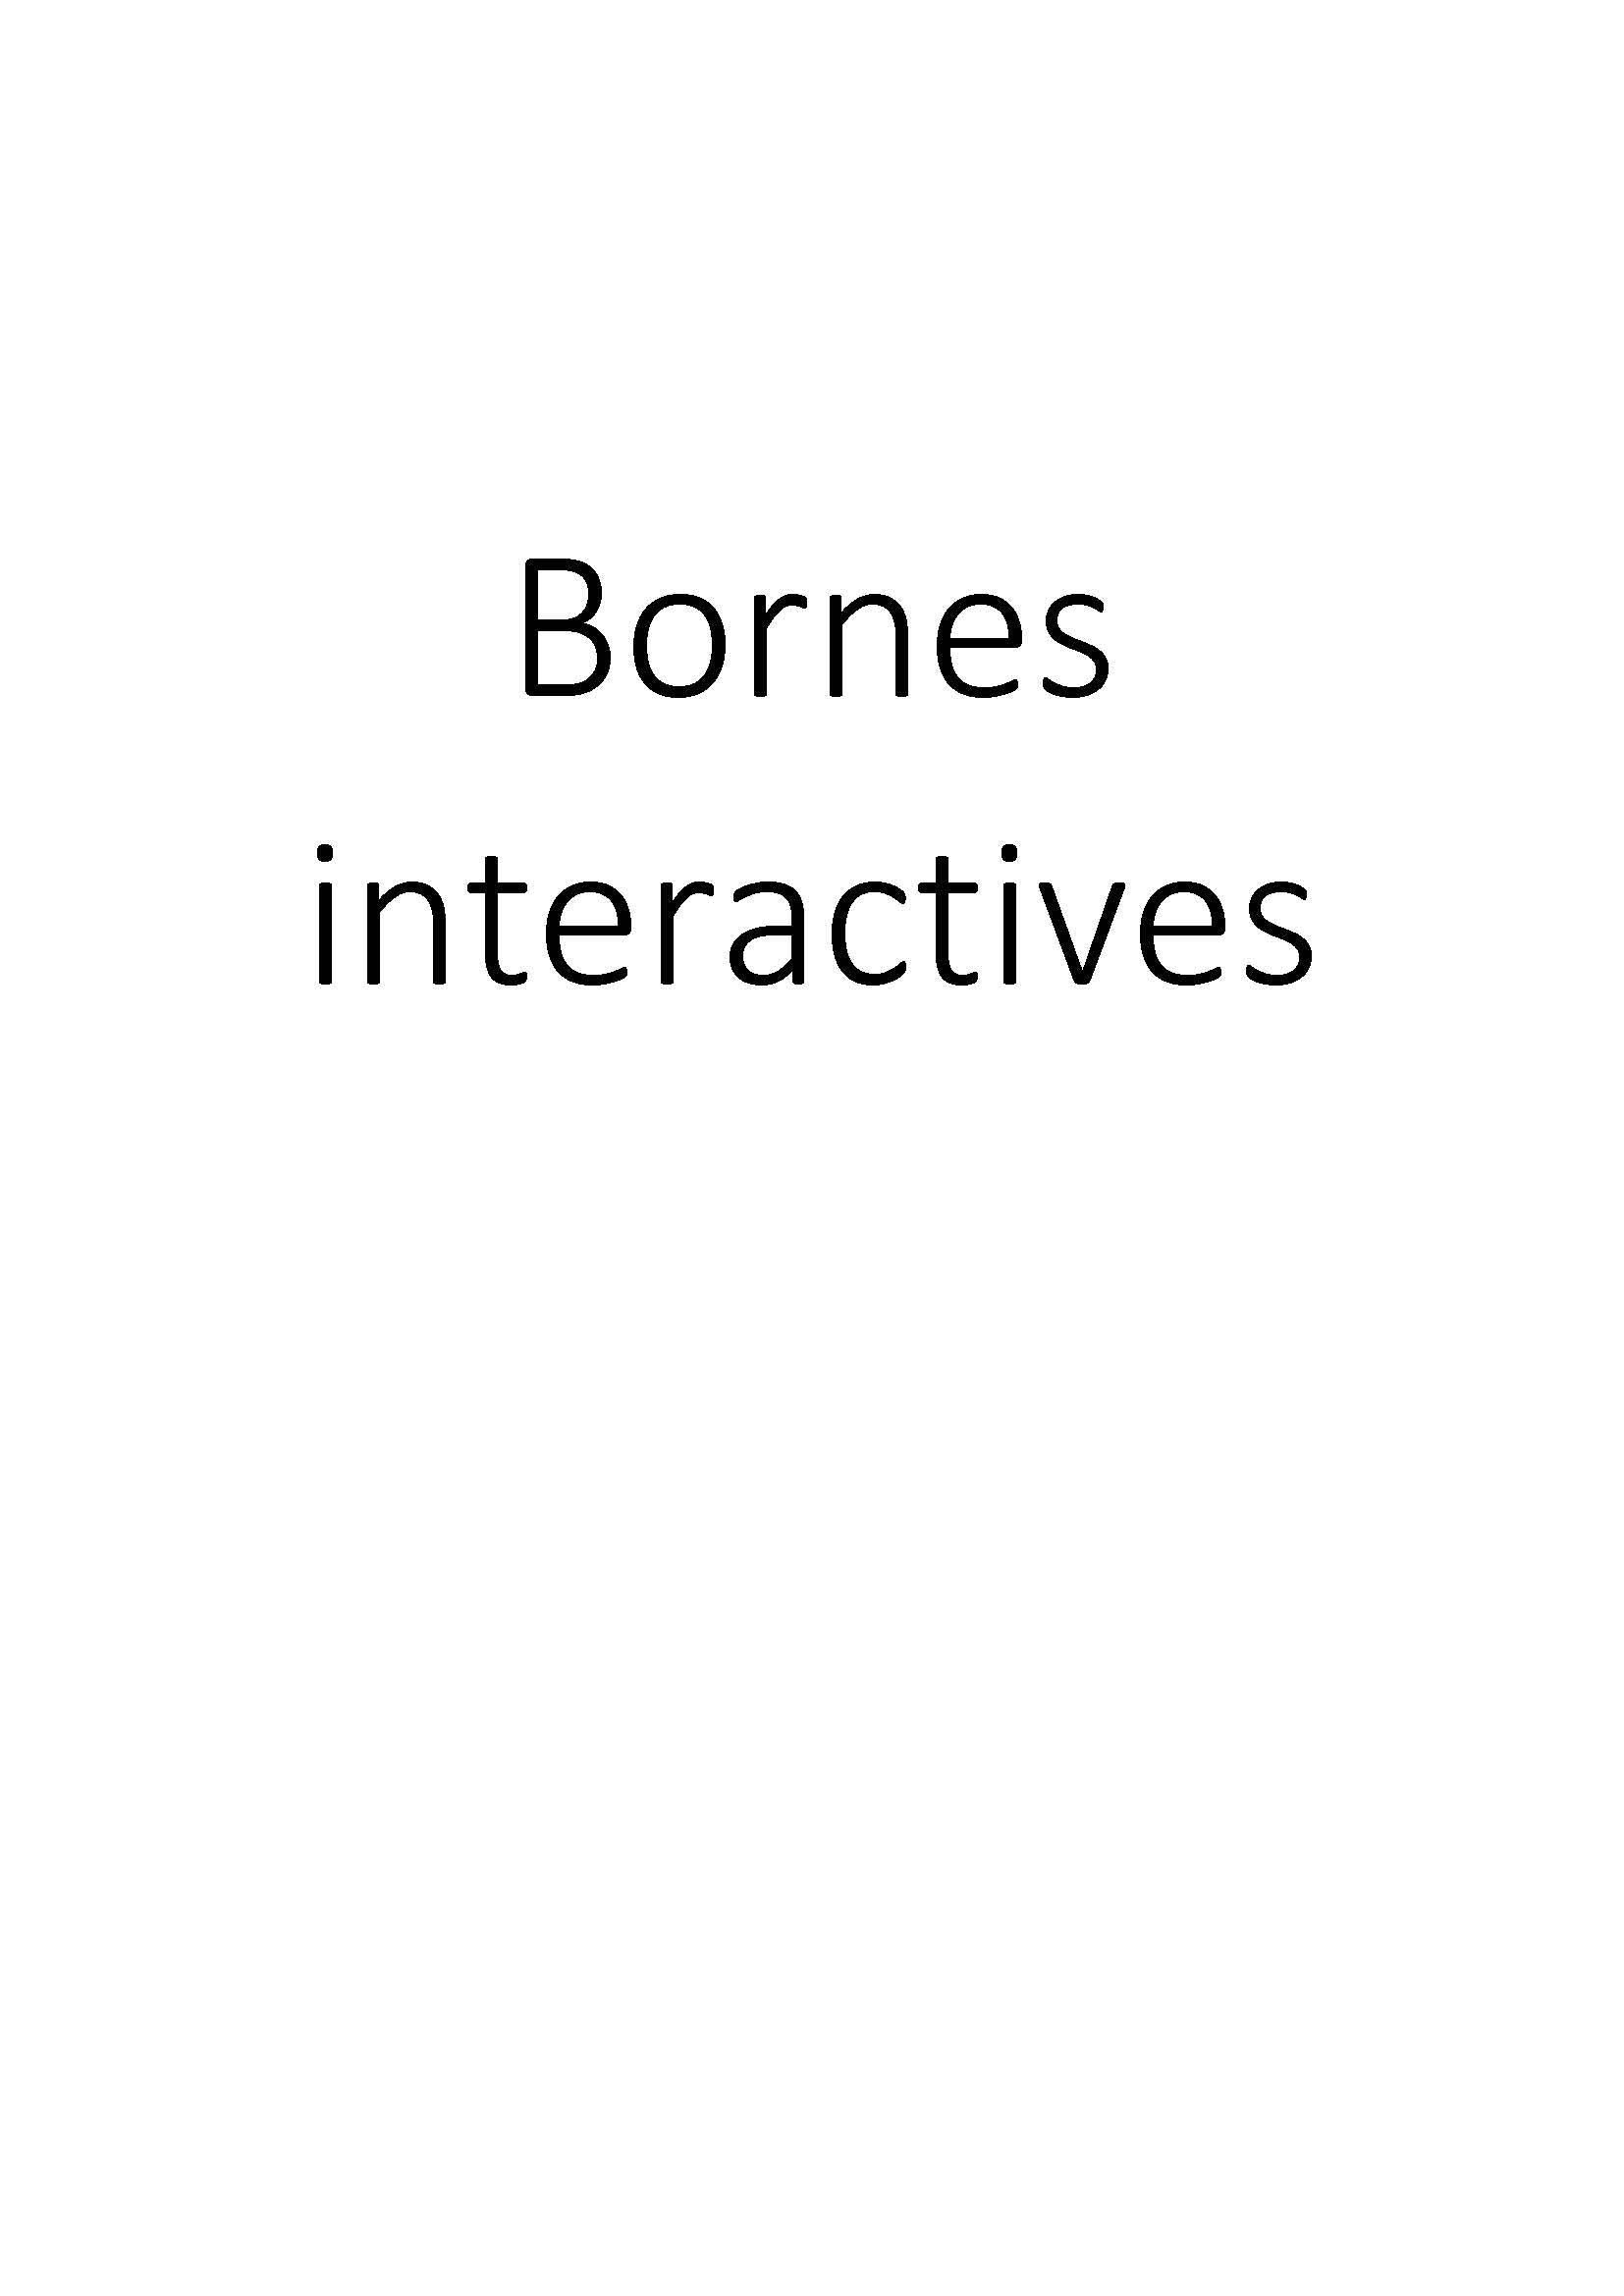 Bornes interactives clicktofournisseur.com